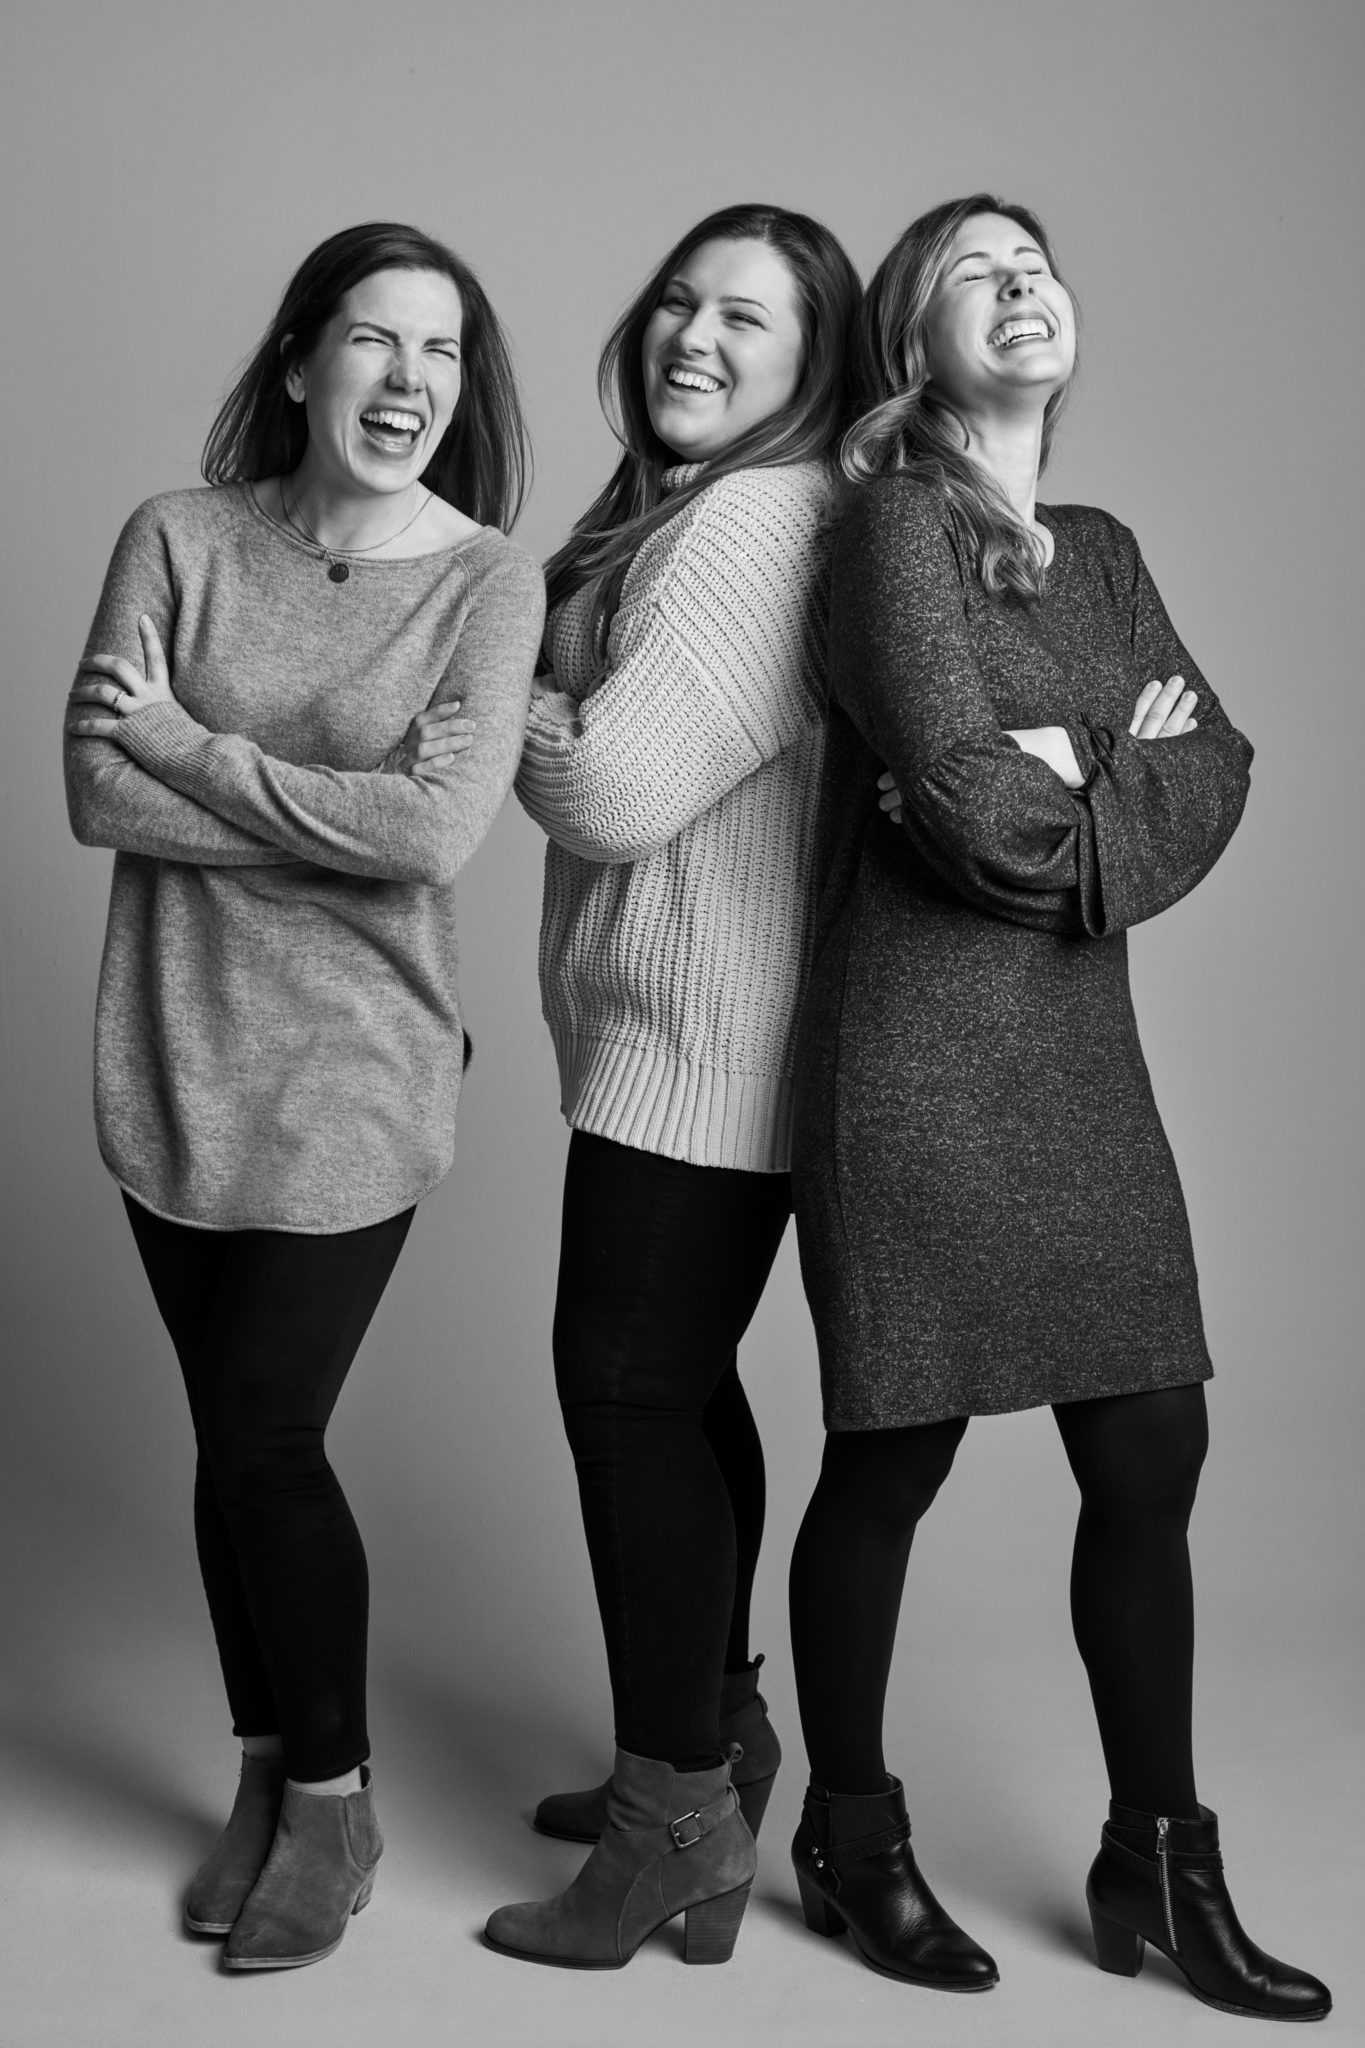 Three women from David's Bridal's PR & Social Media laughing in a photo studio setting